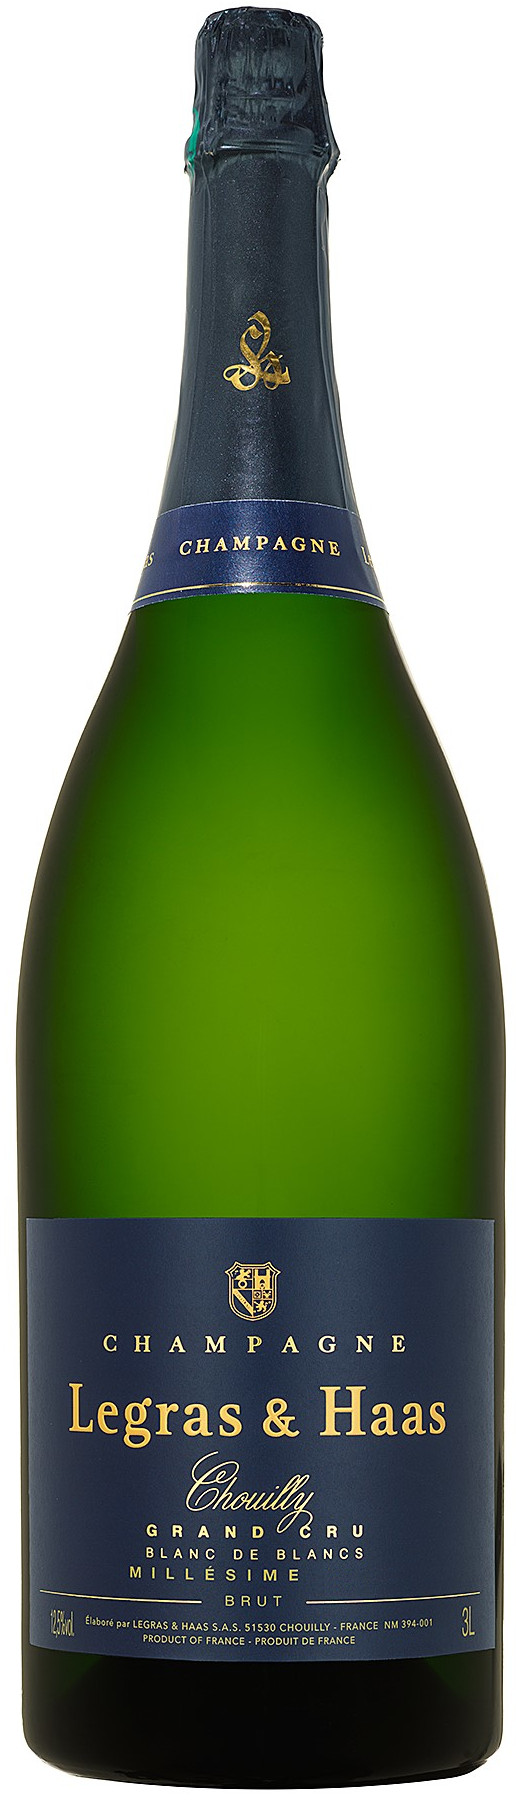 image of Champagne Legras & Haas Blanc de Blancs Grand Cru, Jeroboam 2015